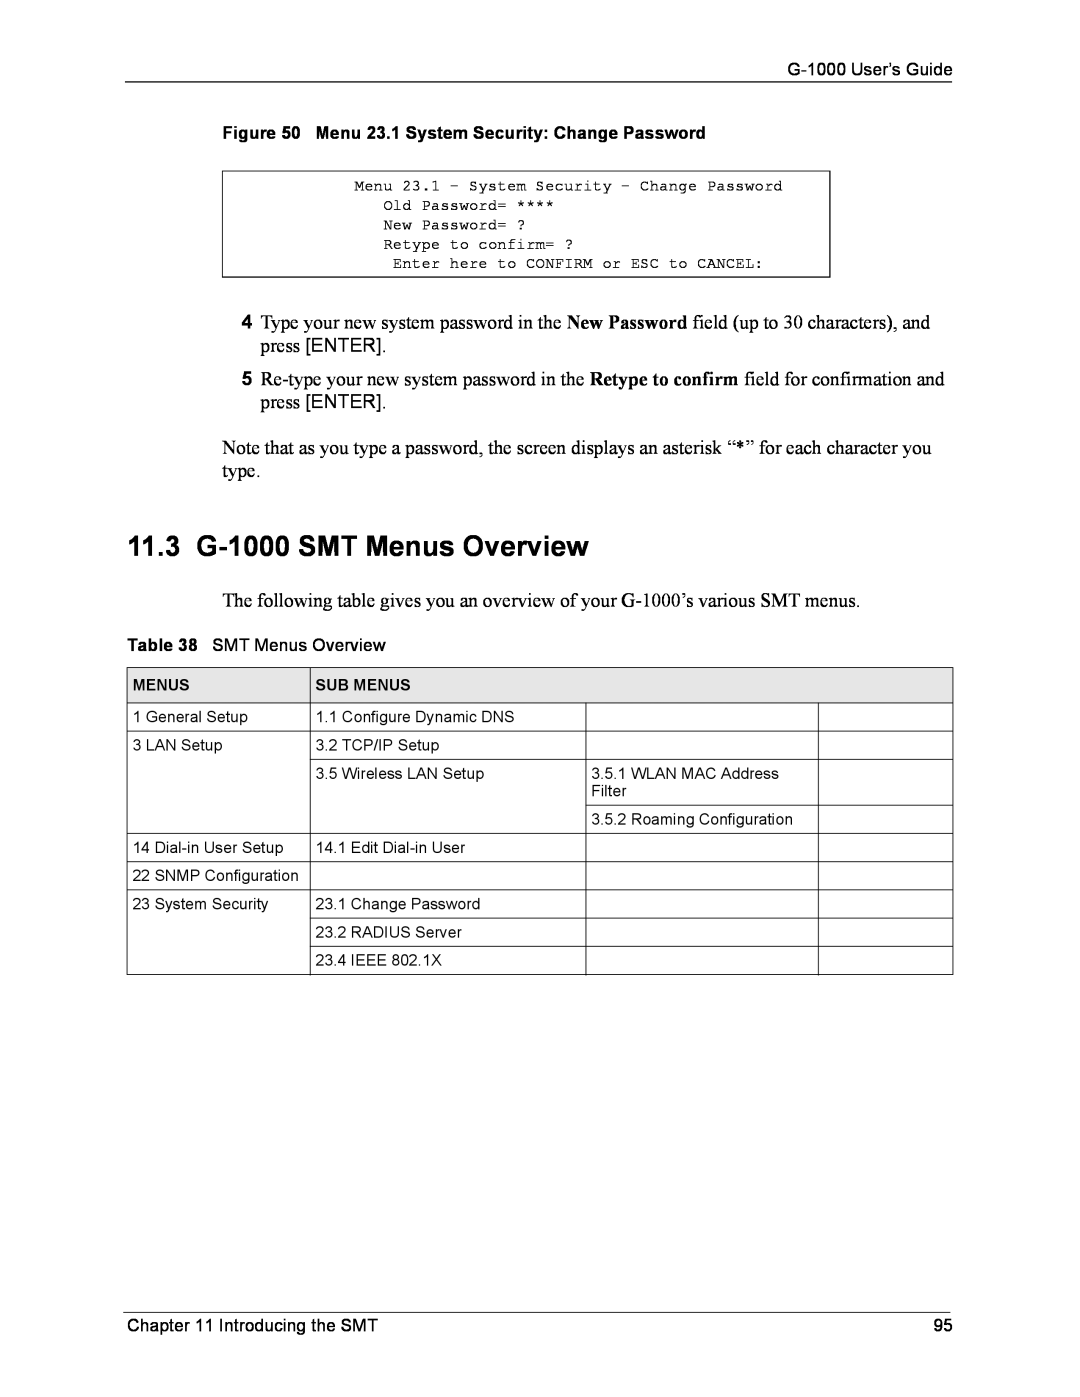 ZyXEL Communications manual 11.3 G-1000 SMT Menus Overview, Menu 23.1 System Security Change Password 